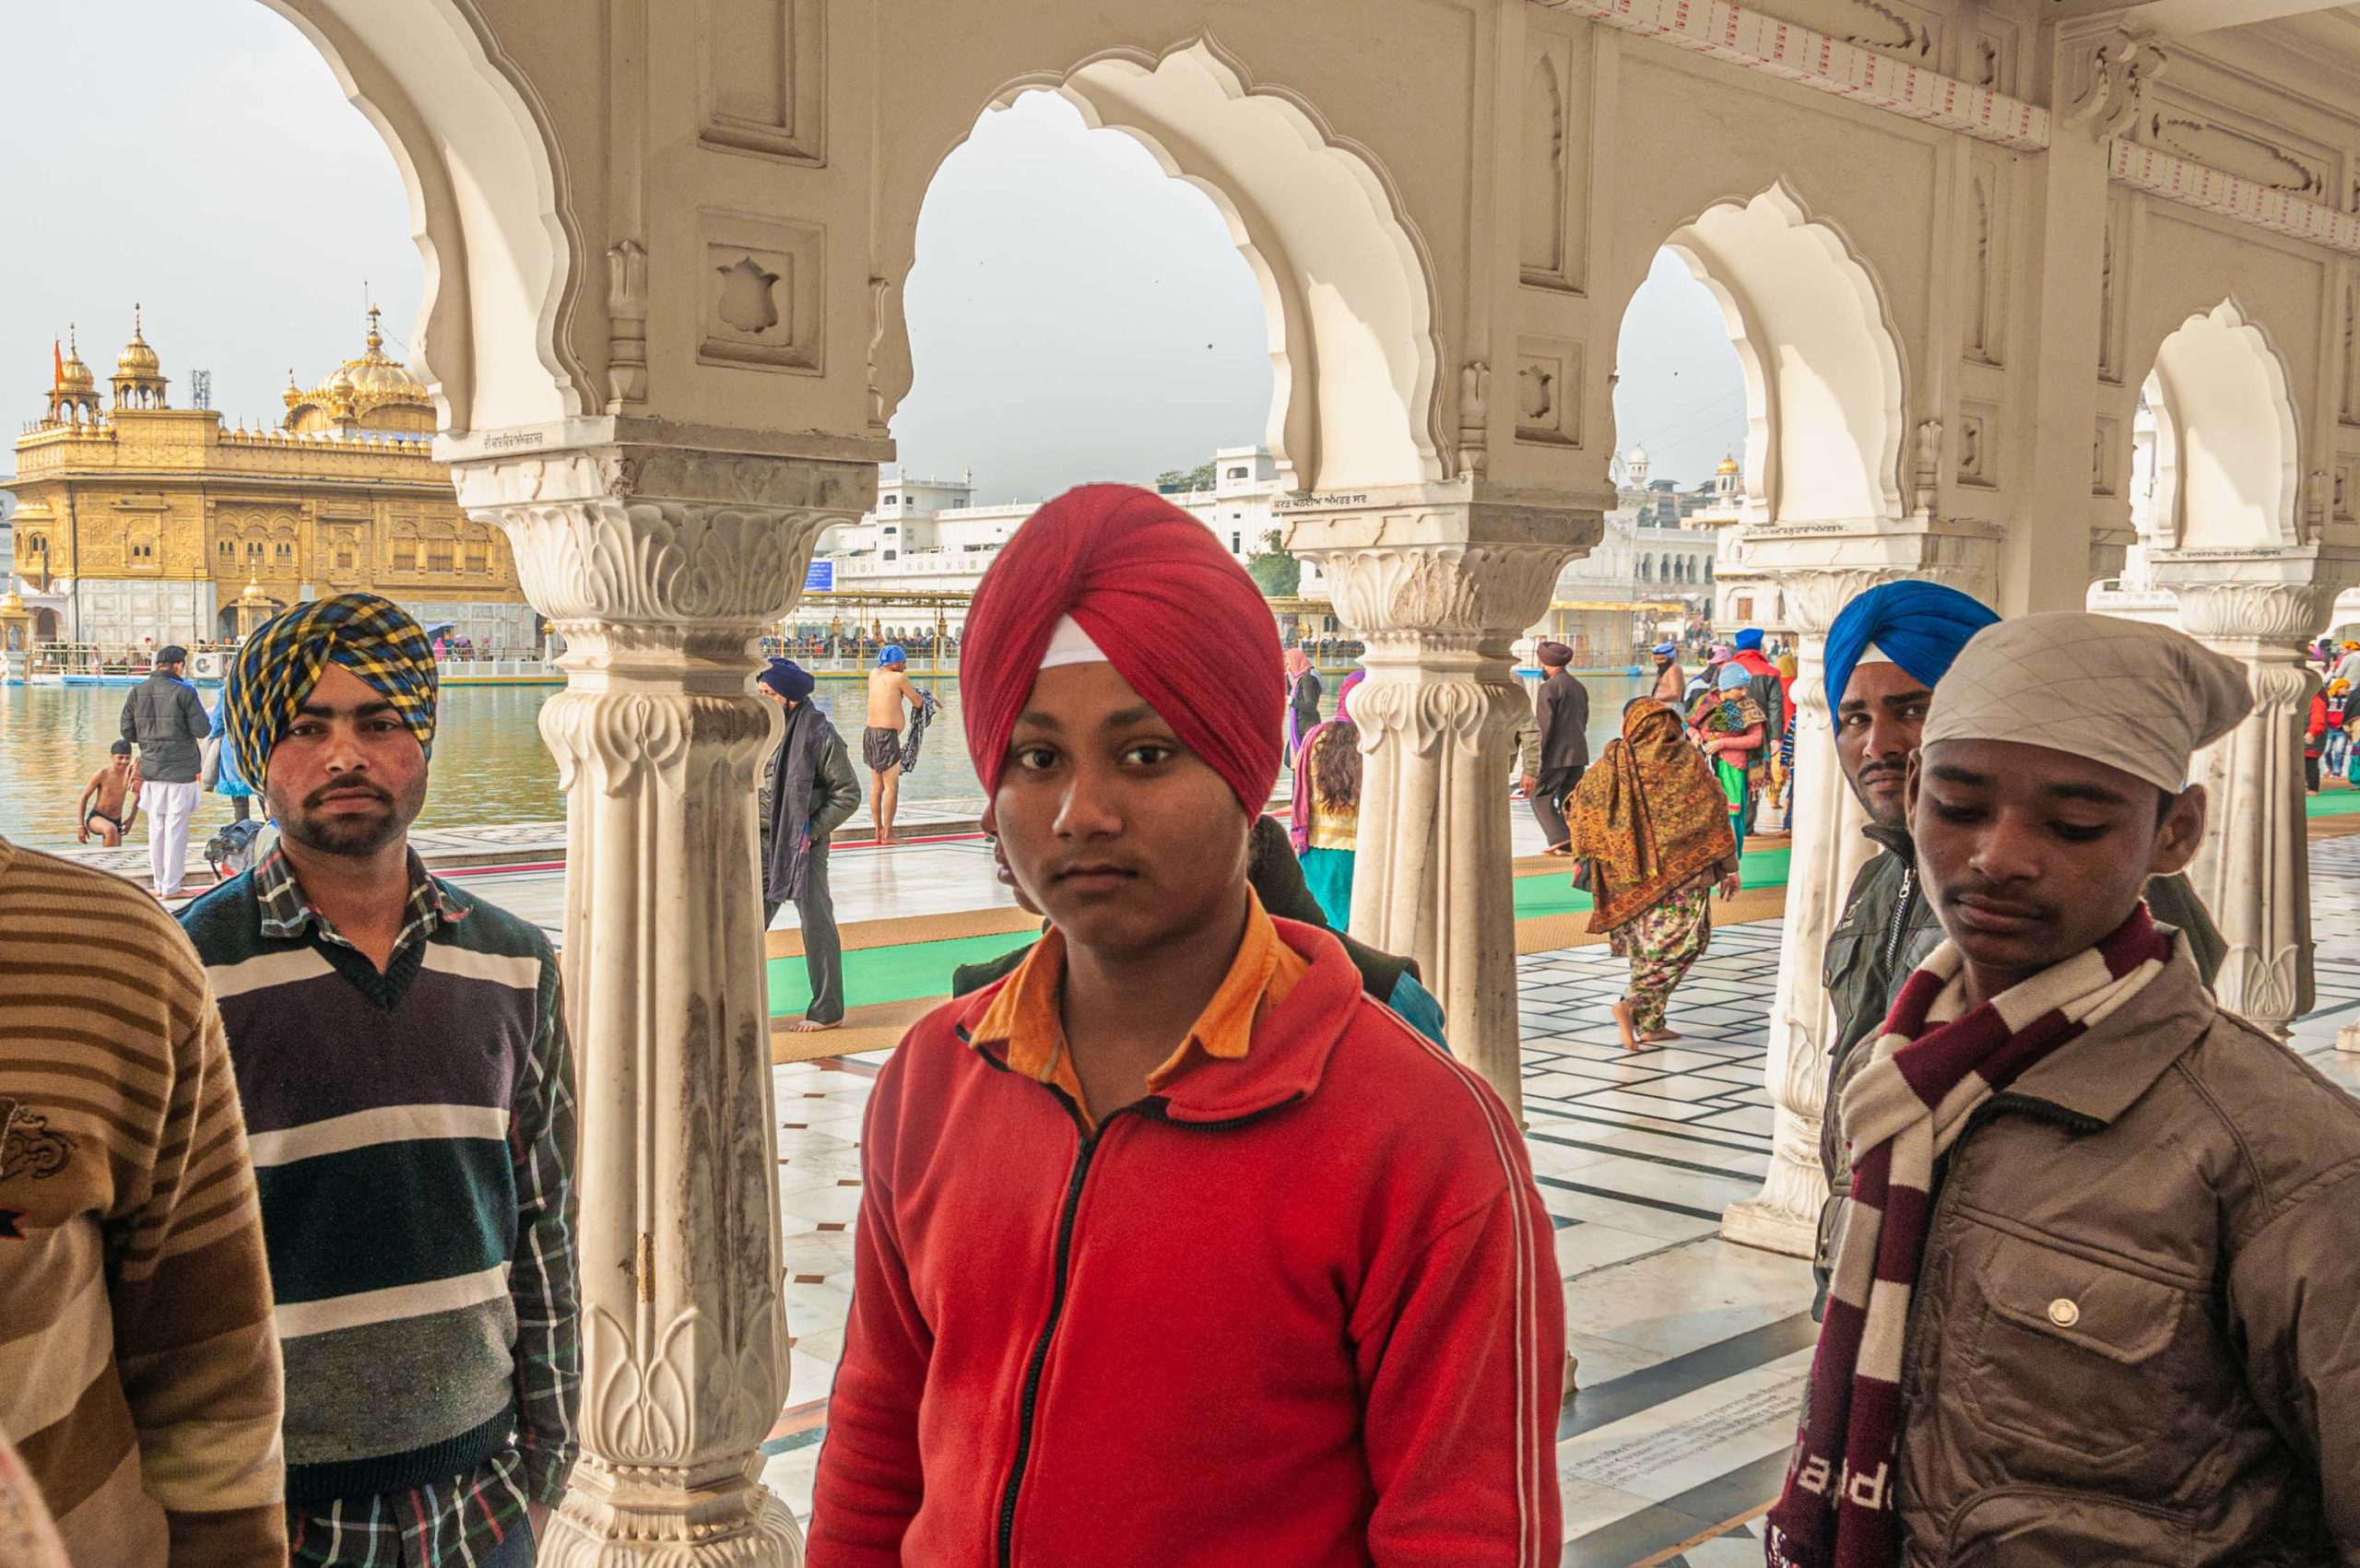 Sikh men Golden Temple Amritsar India Sikhism